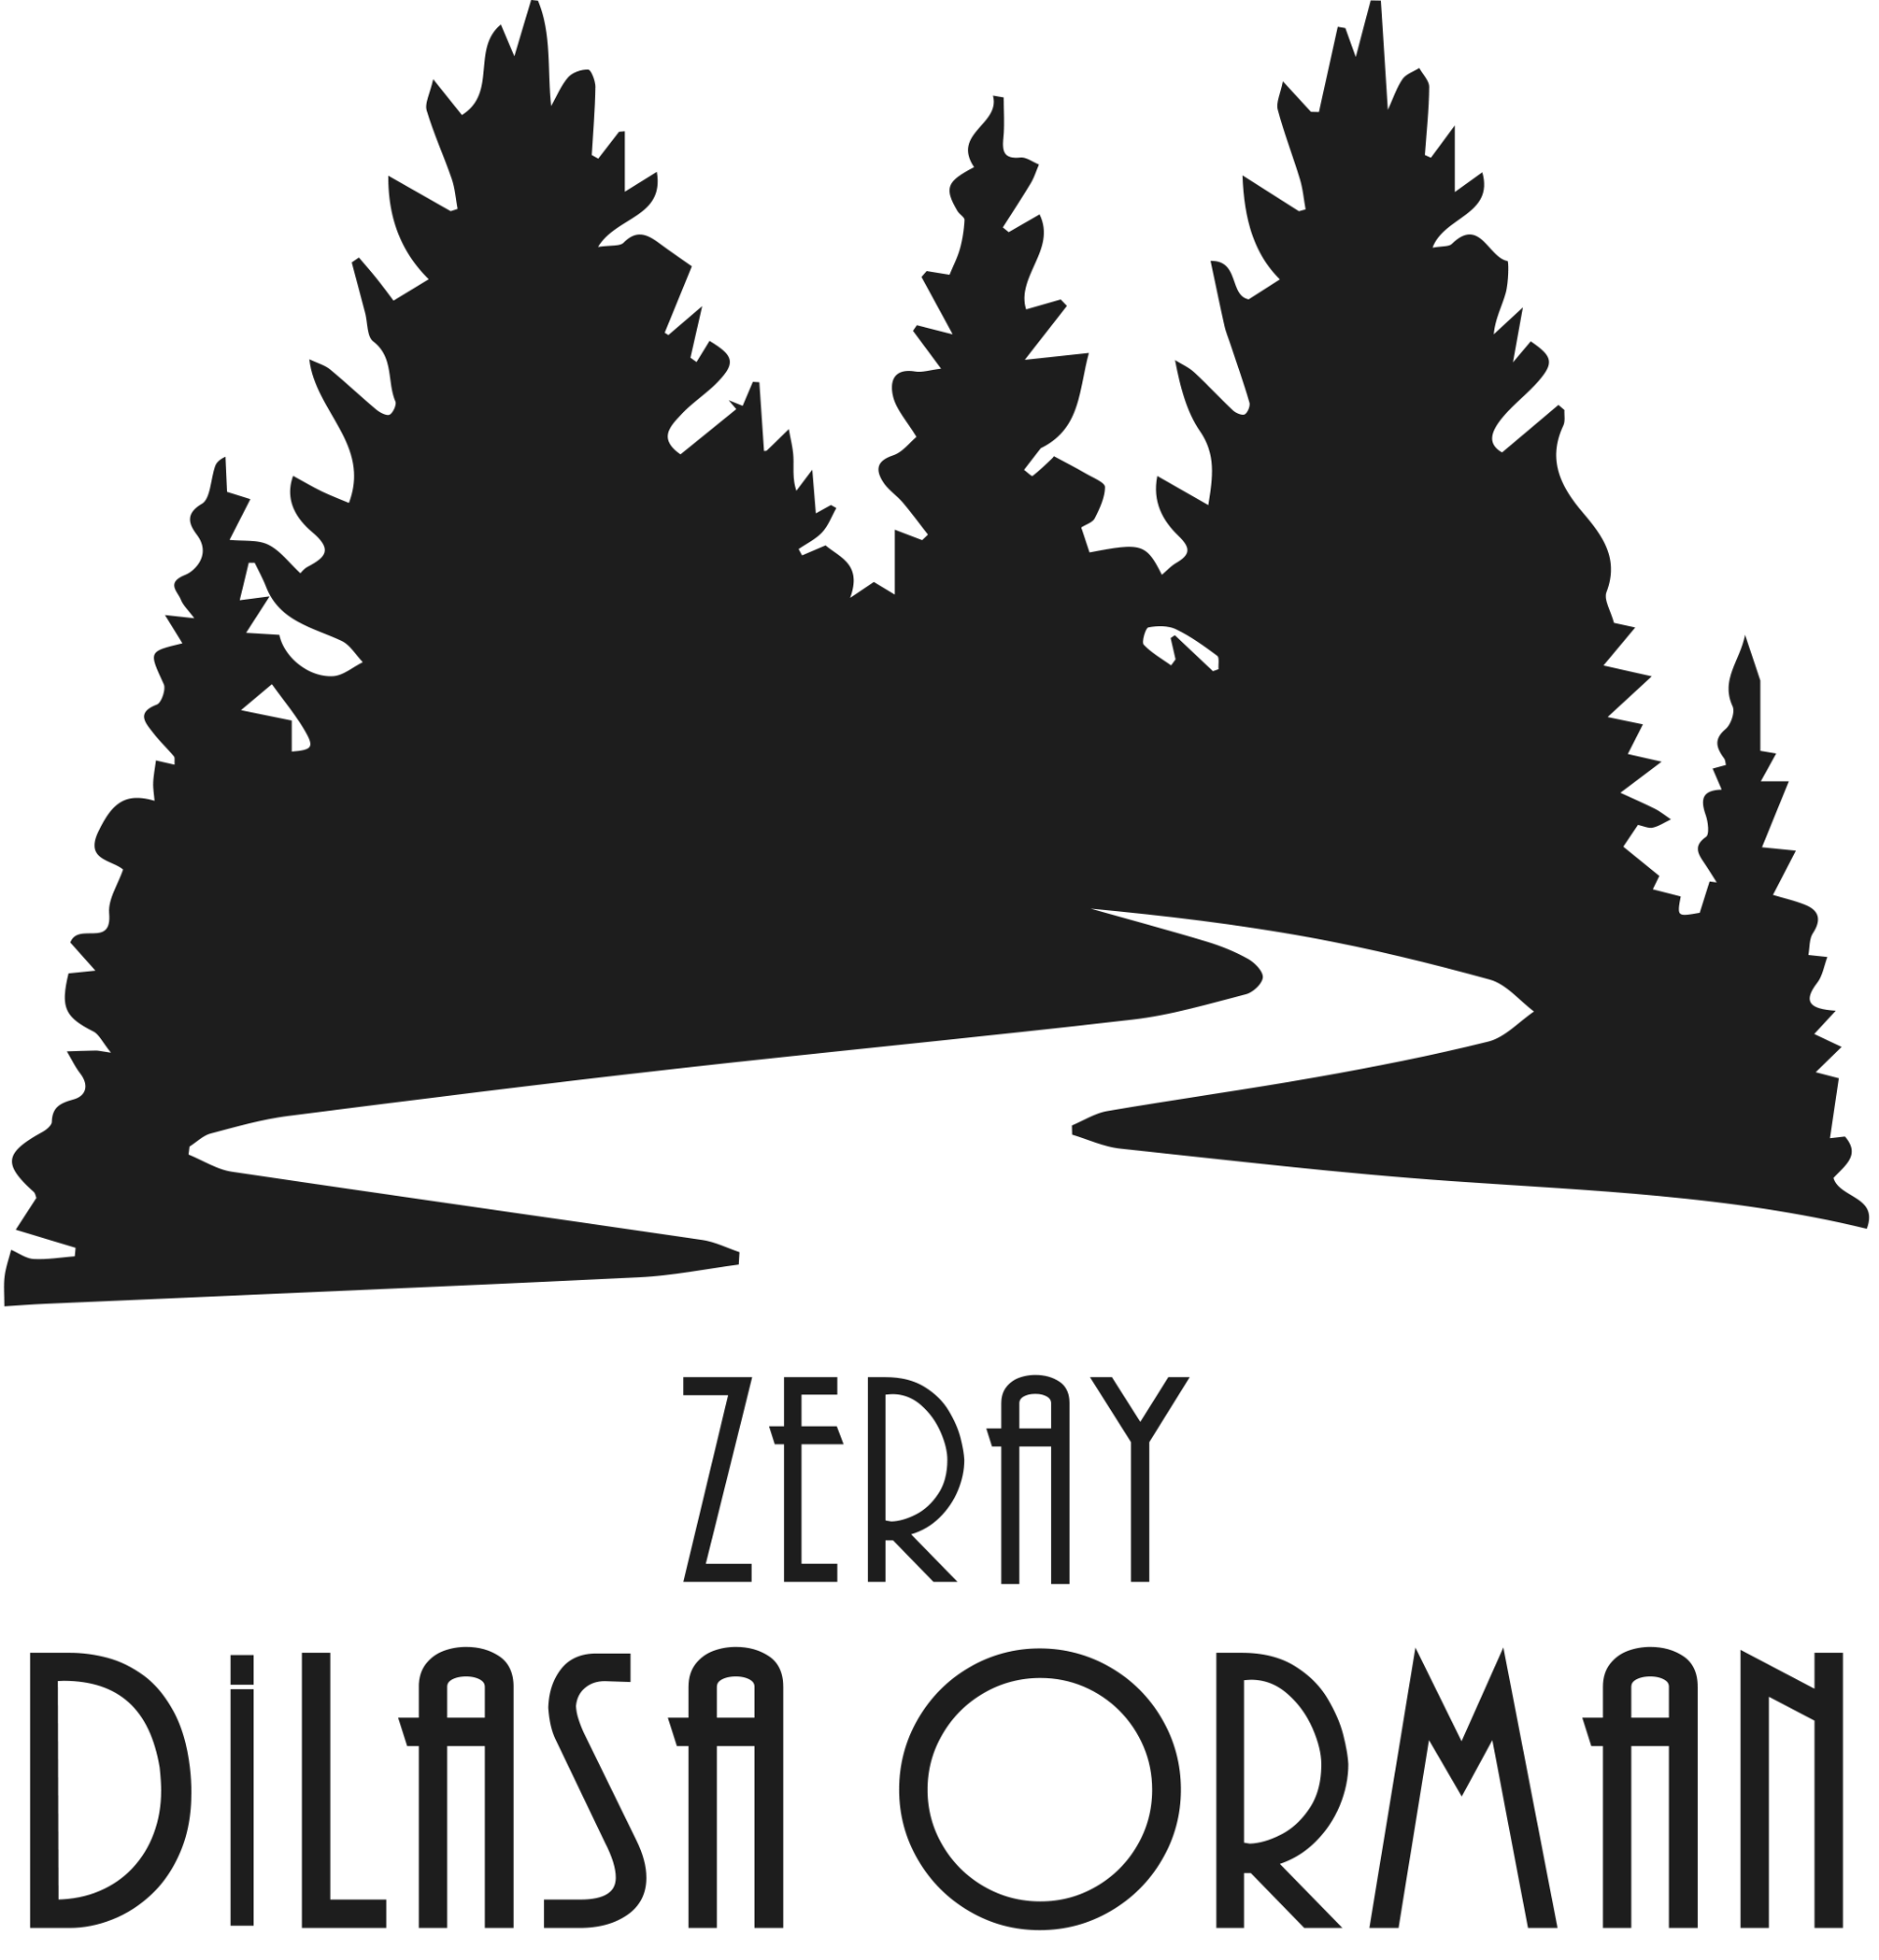 Zeray Dilasa Orman